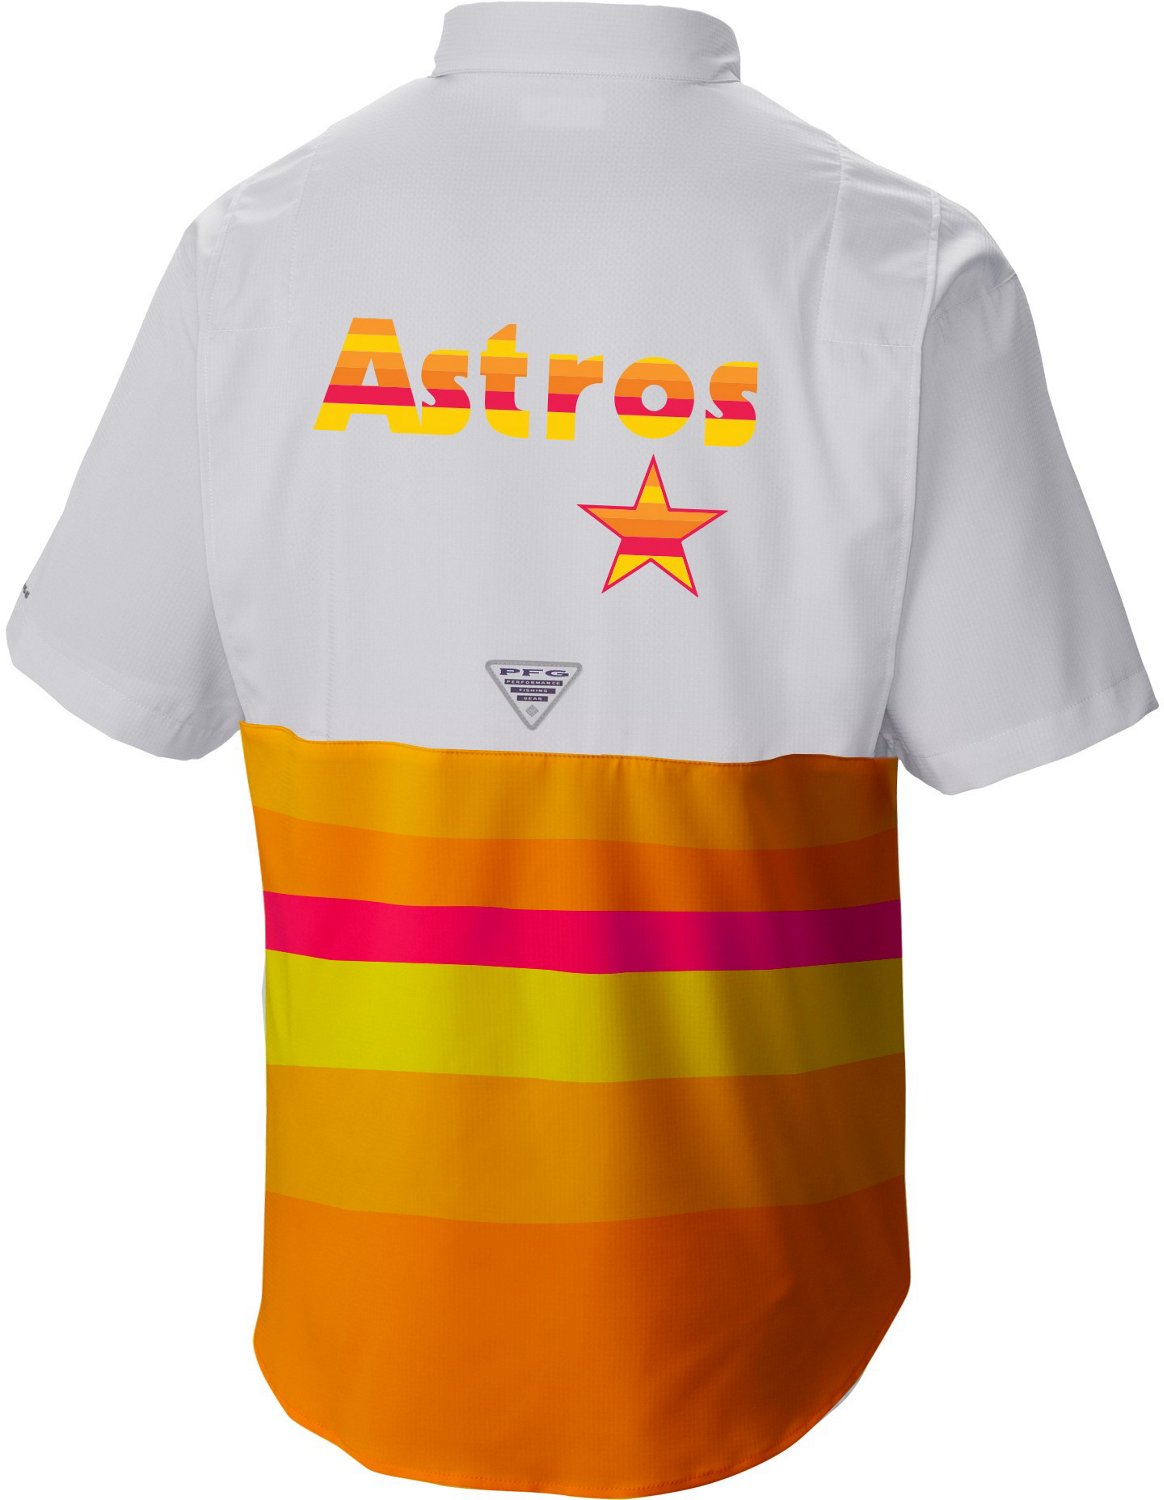 columbia astros shirts